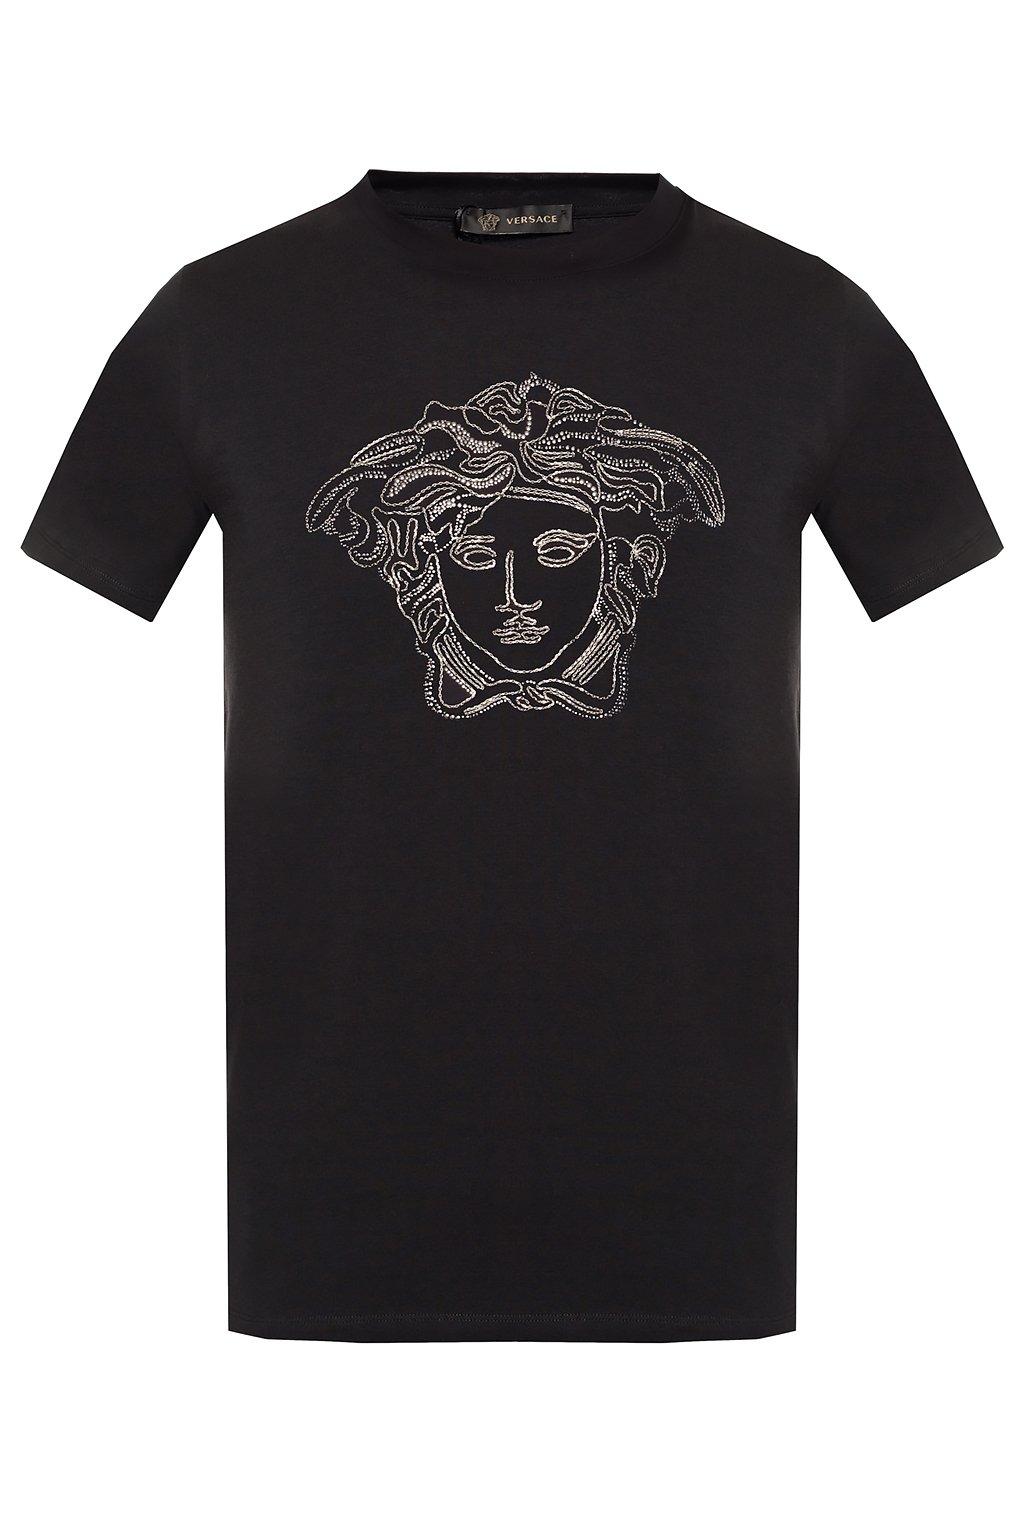 Versace Cotton Medusa Head T-shirt in Black for Men - Lyst